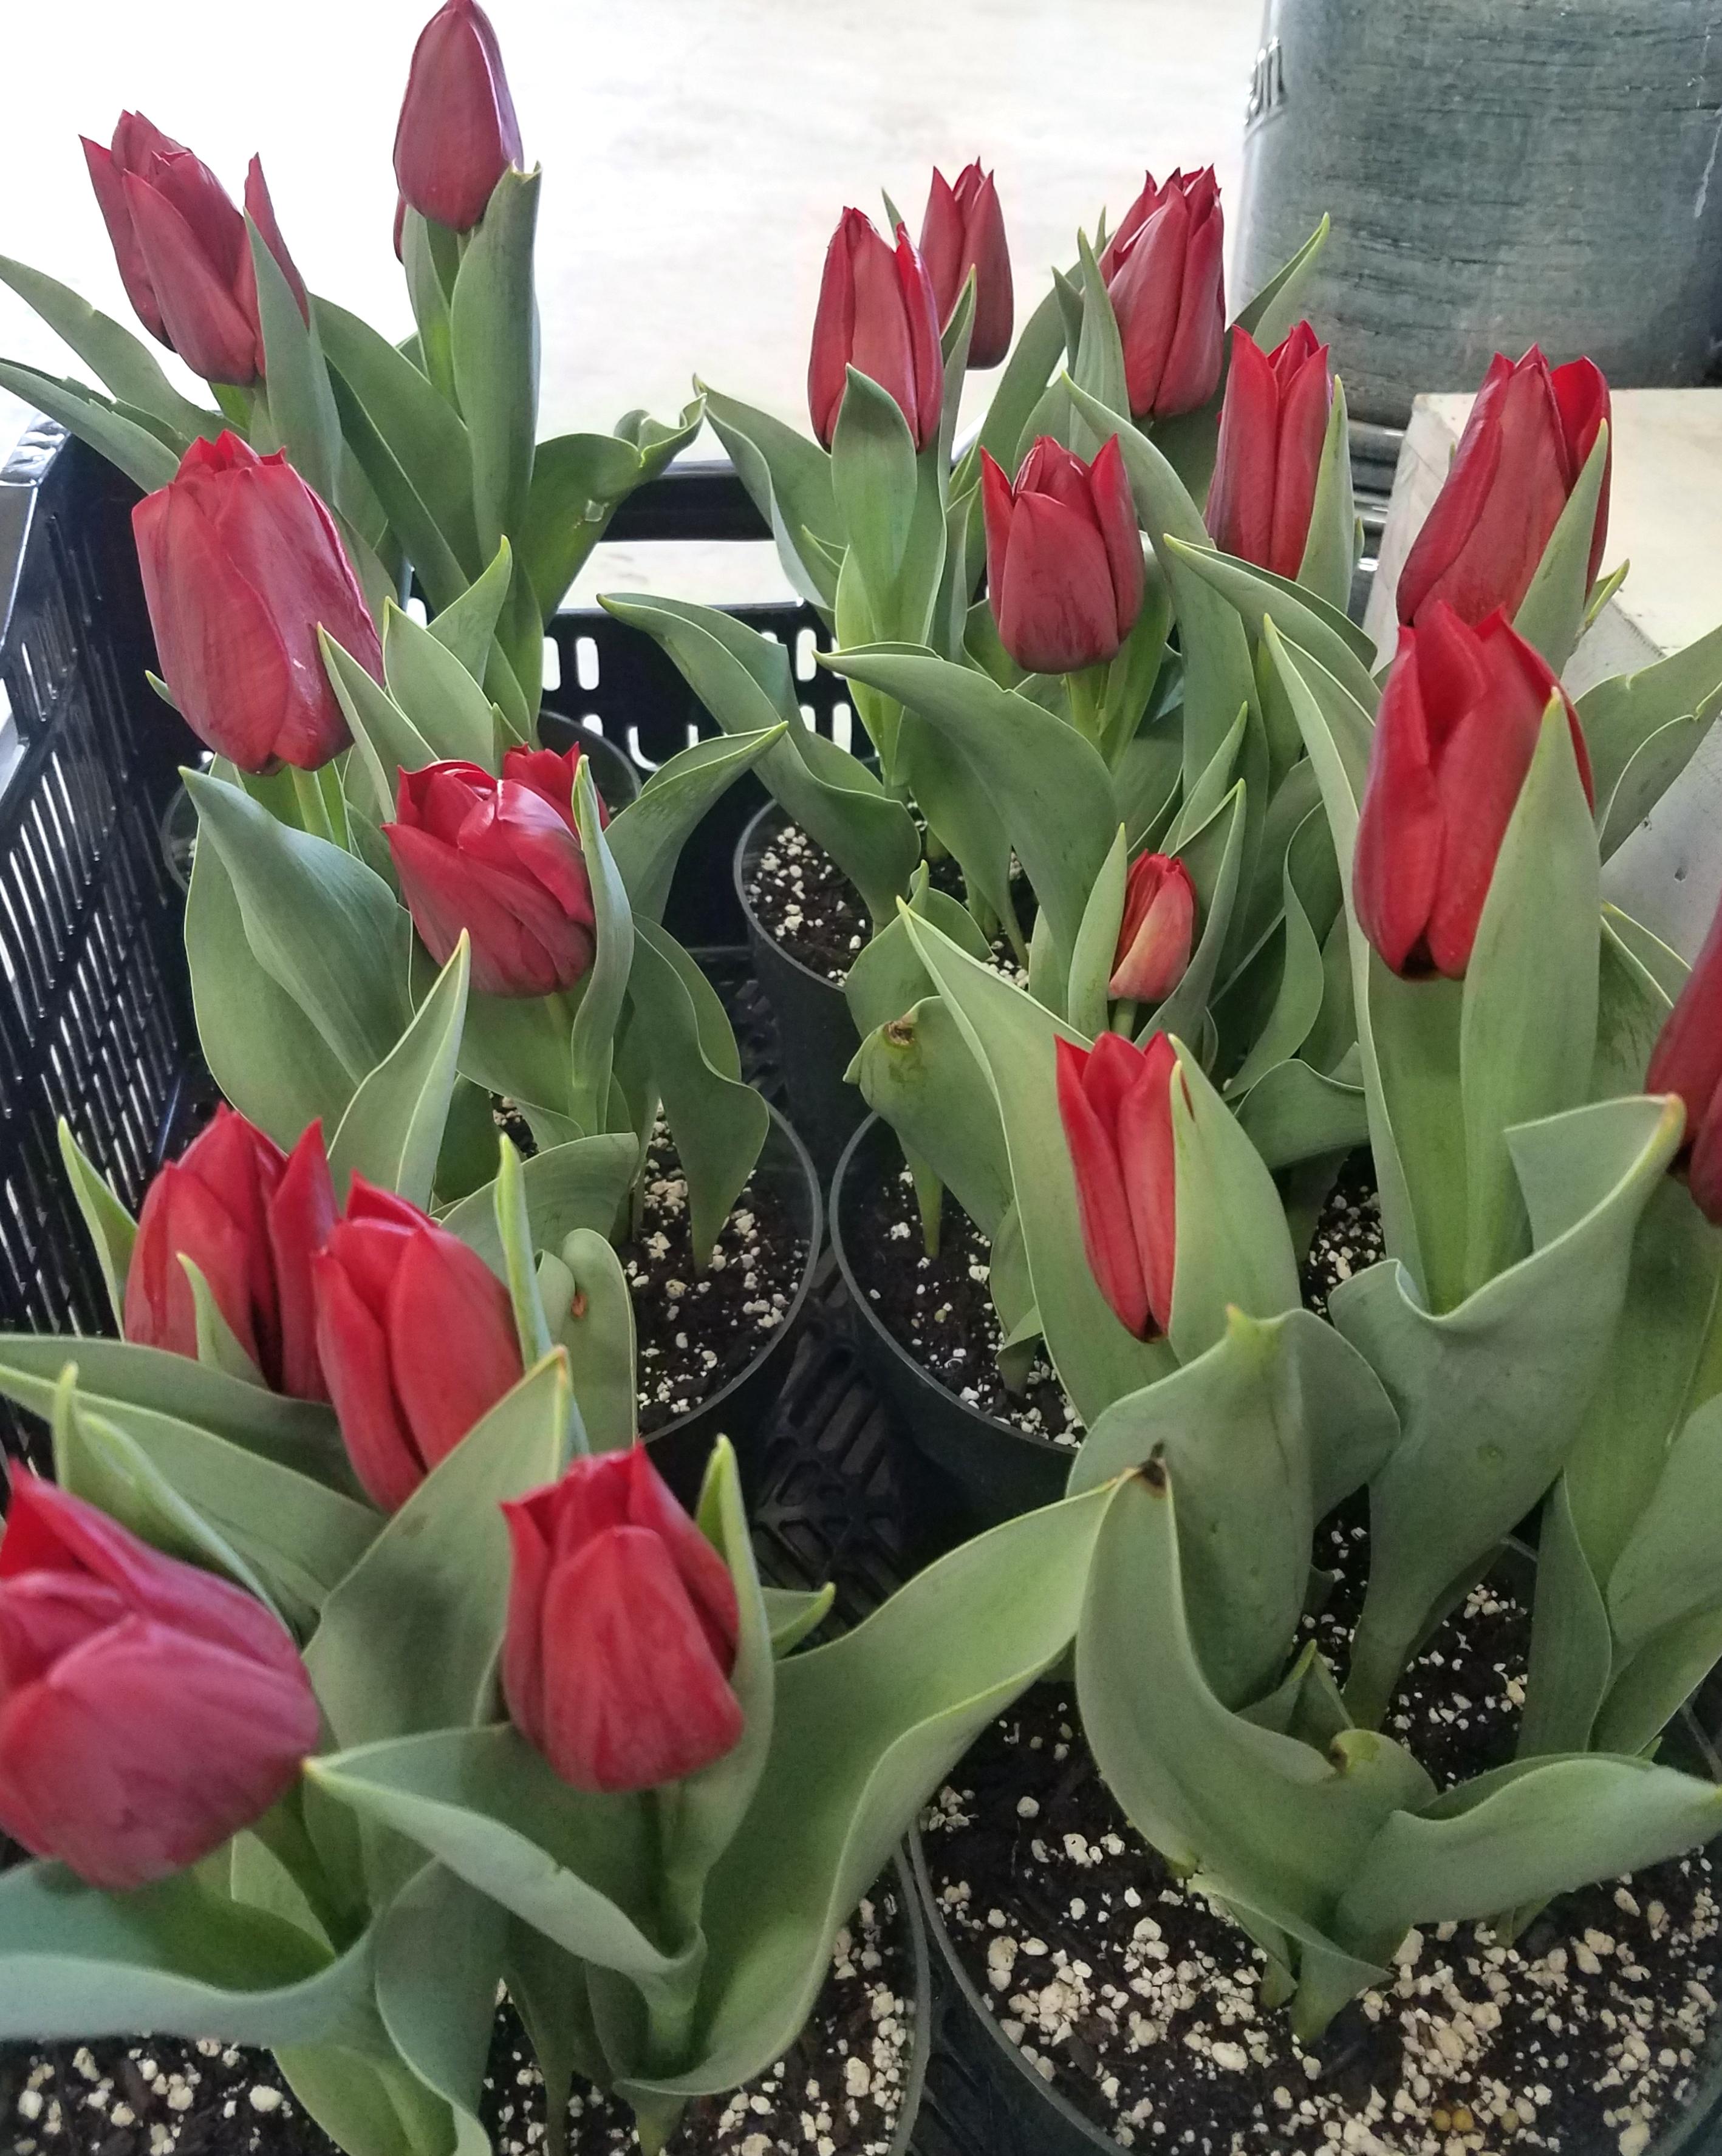 Tulip Triumph 'Dominiek' - Tulip from Leo Berbee Bulb Company